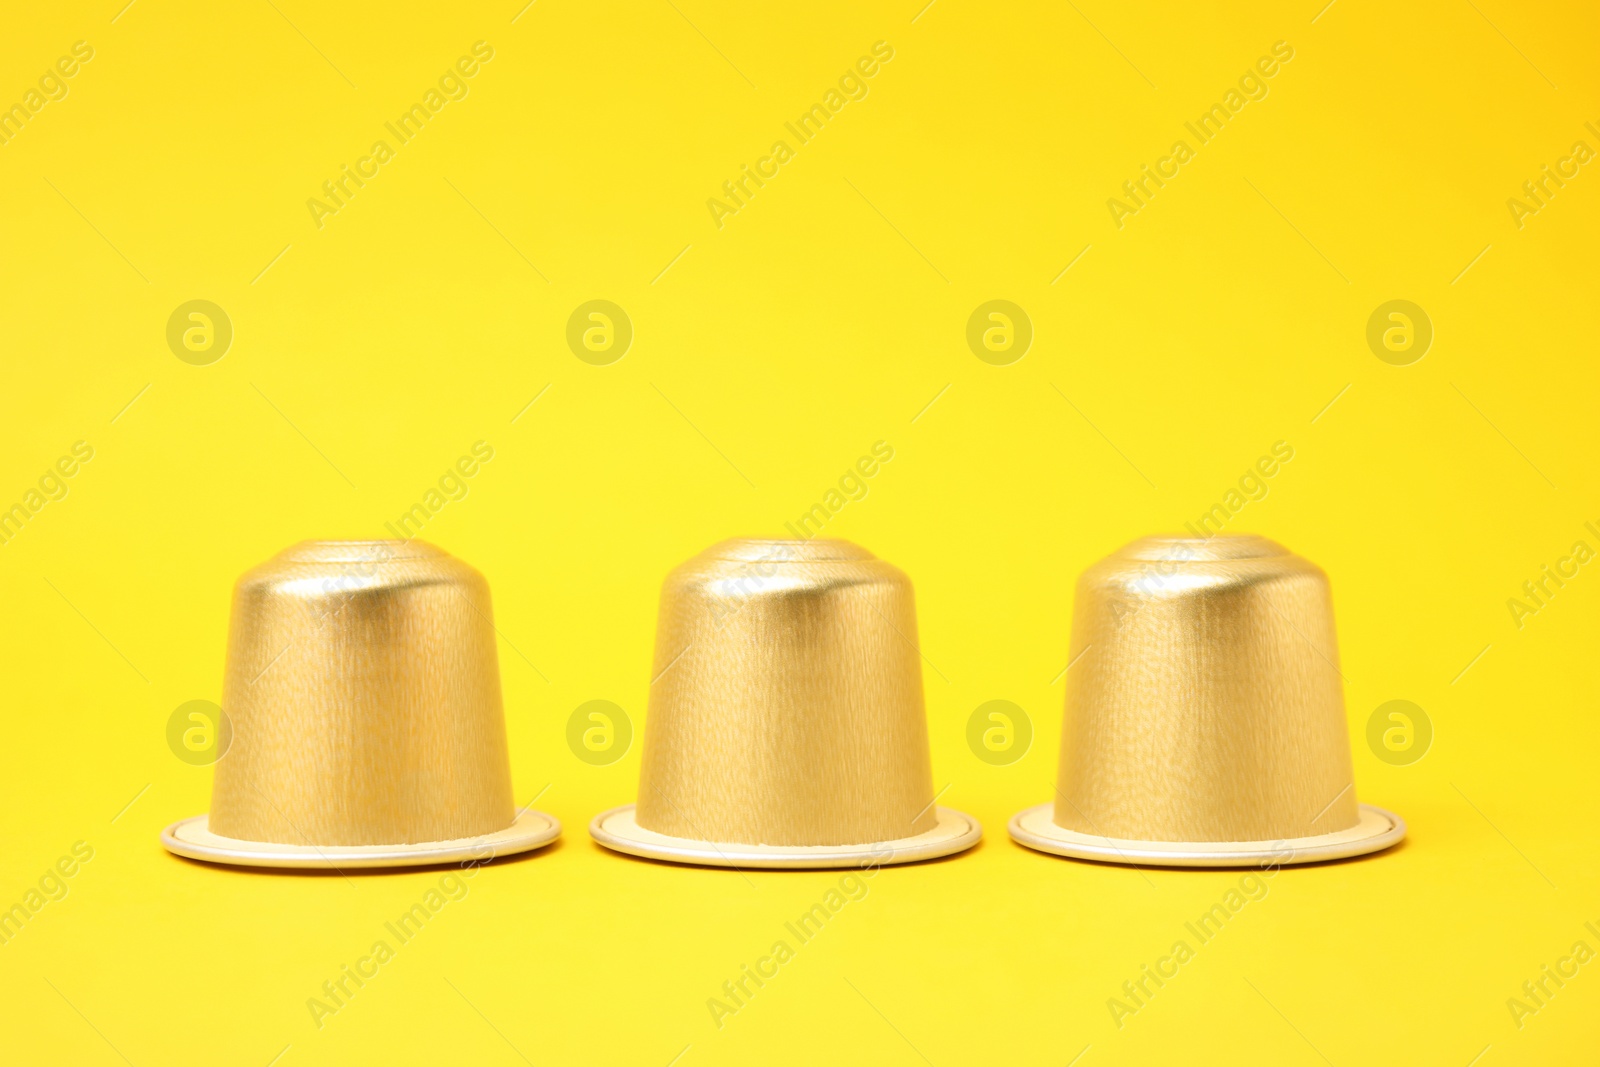 Photo of Three plastic coffee capsules on yellow background